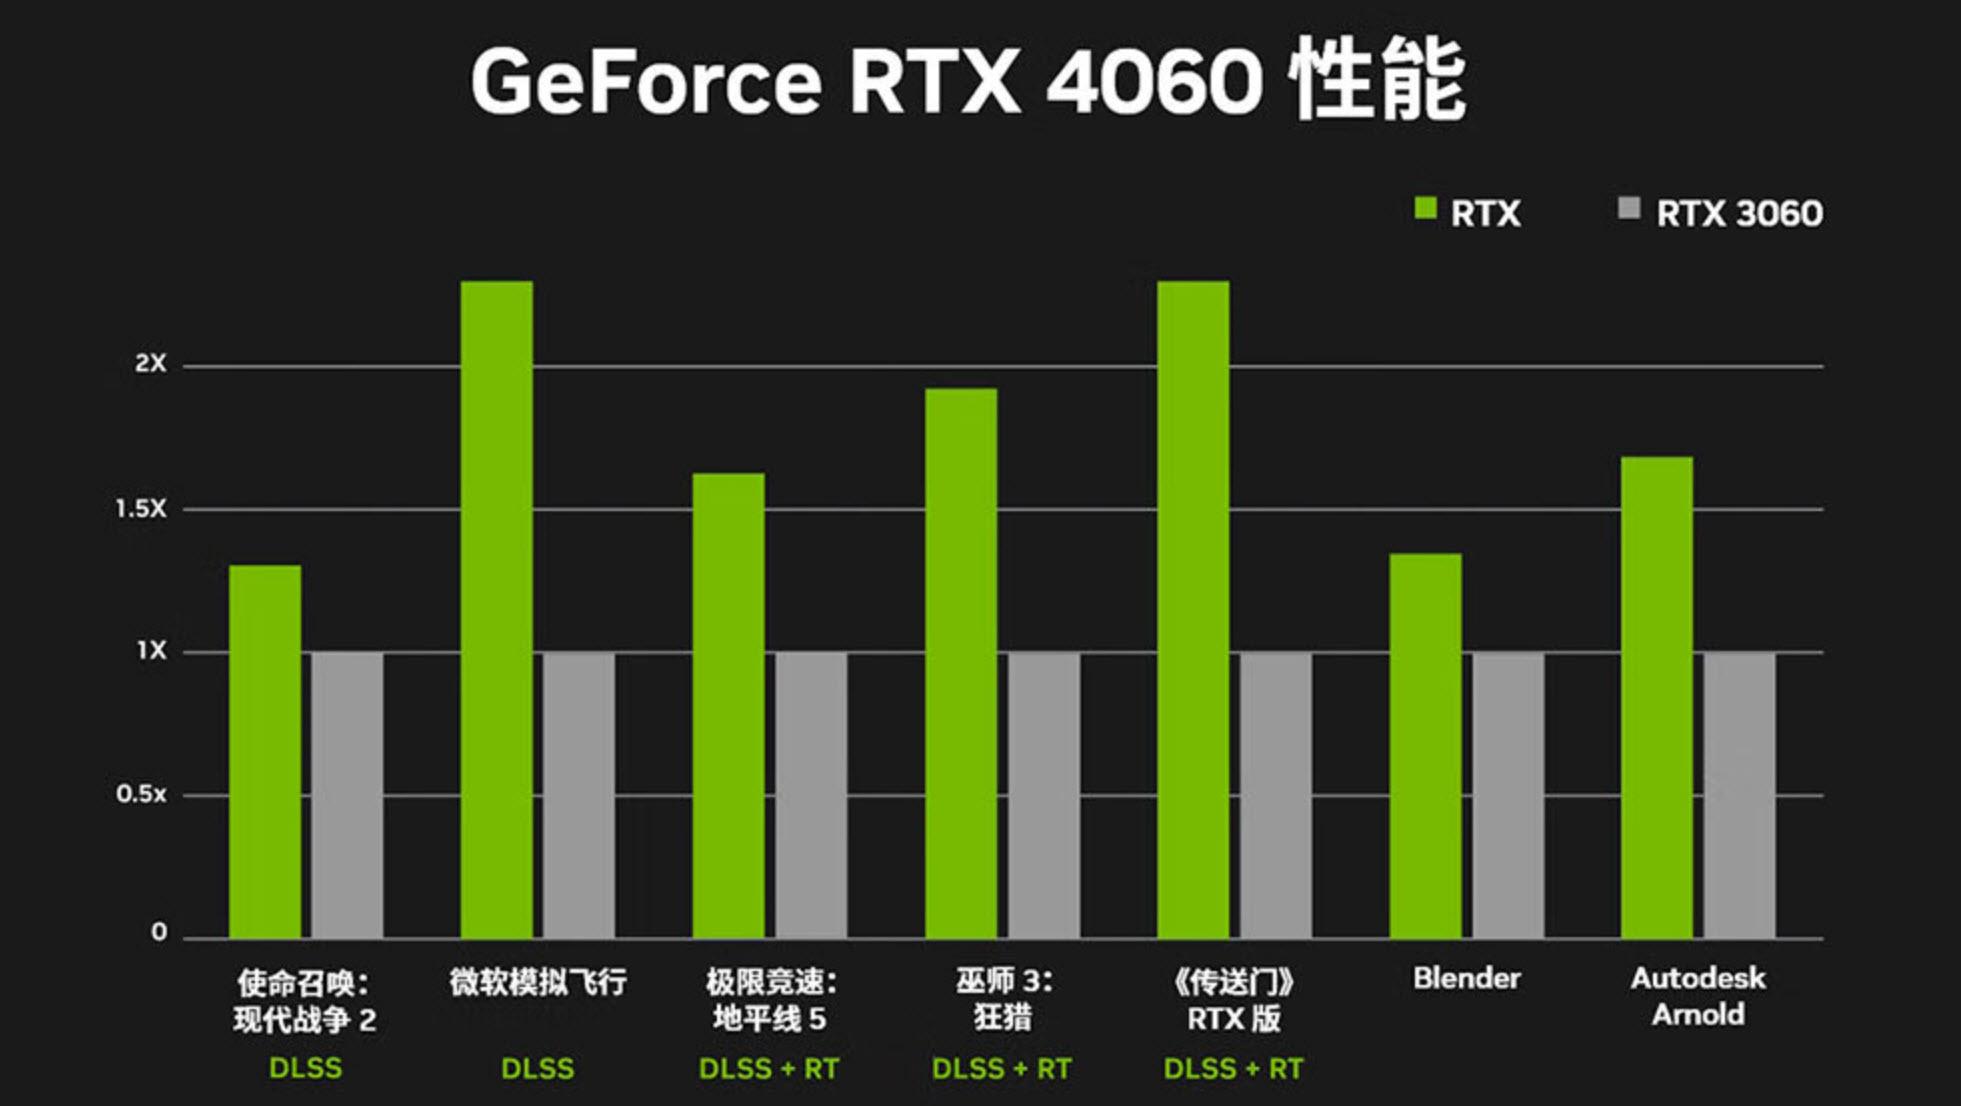 GTX780Ti与R9280X：性能、价位与独特性比较，为您选购显卡提供参考  第4张